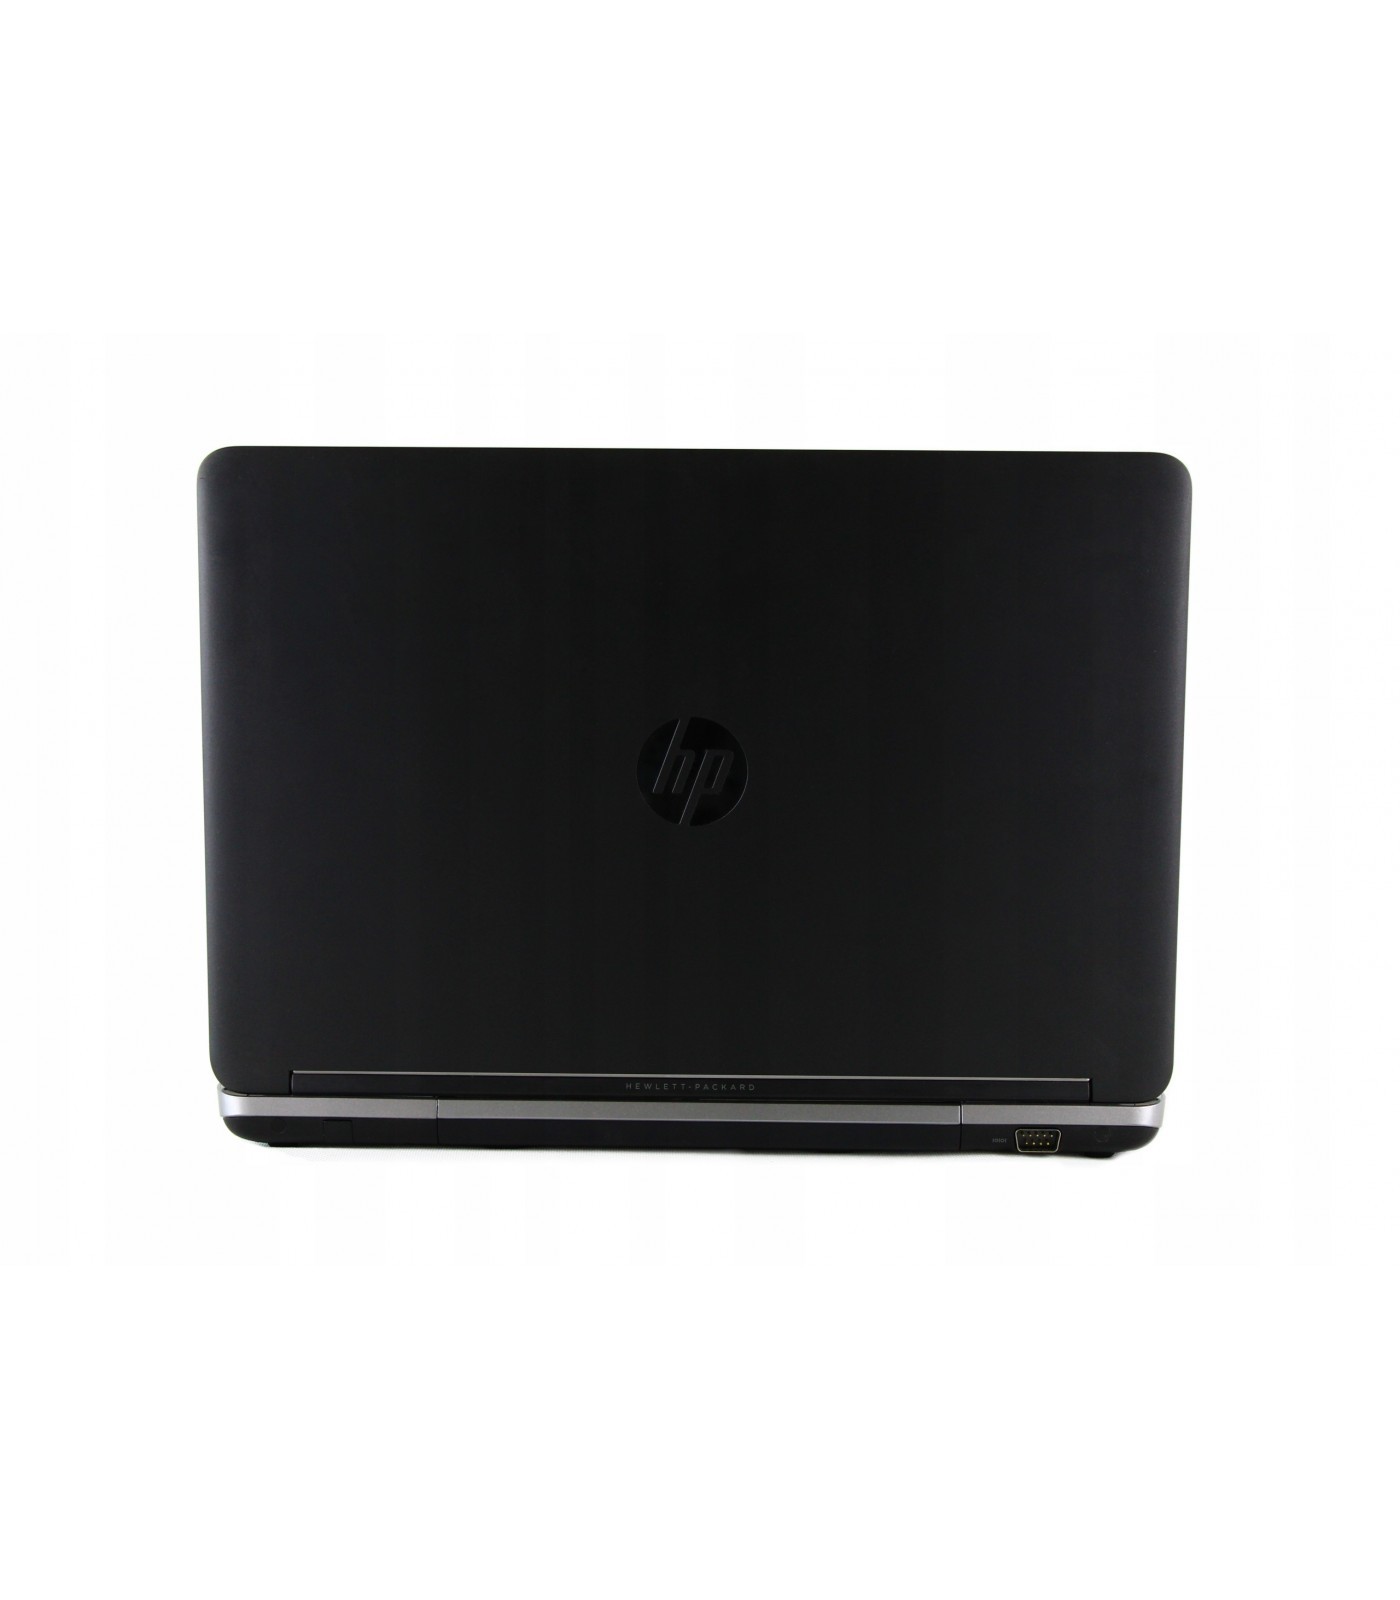 Poleasingowy laptop HP ProBook 650 G1 z Intel Core i3-4300M w Klasie A+